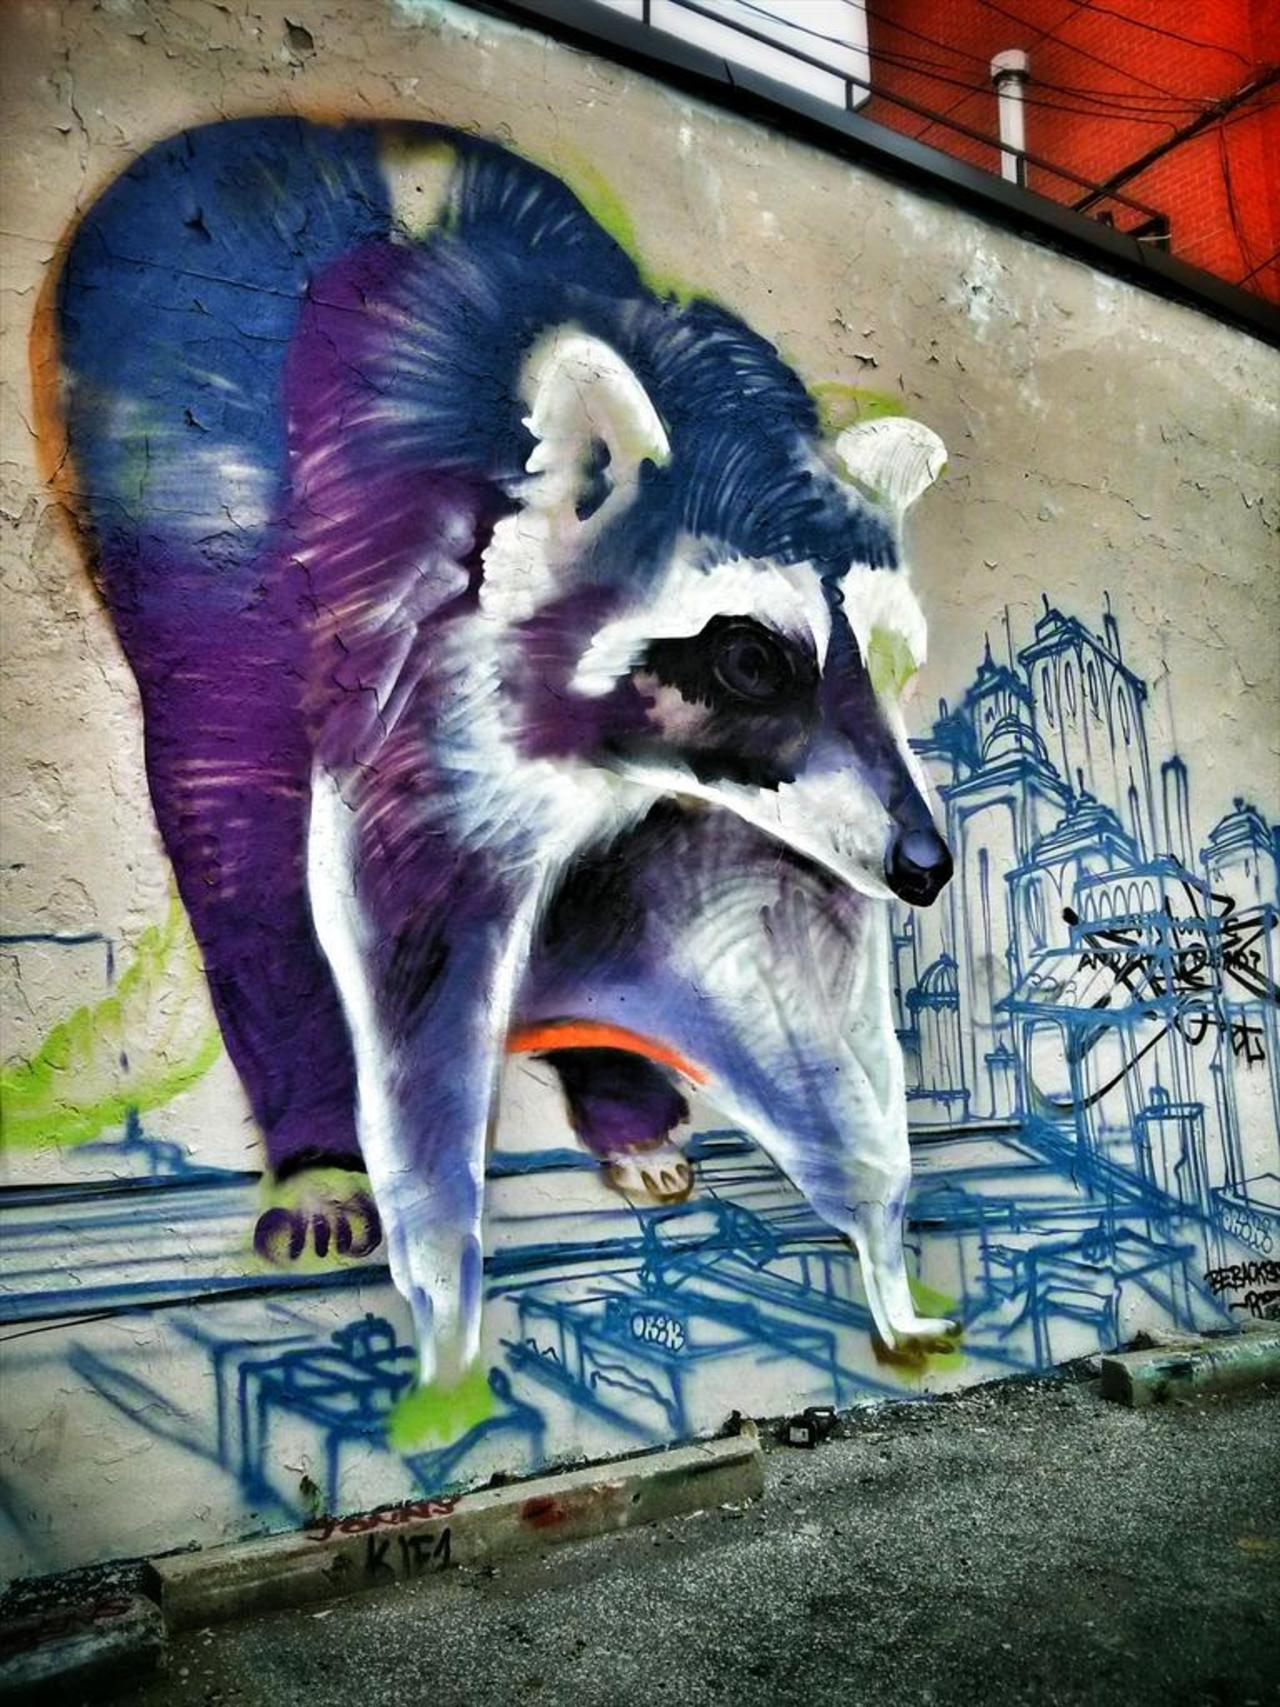 RT @Catjk68: WIP by Poser, Portland Street, Toronto.
#graffiti #streetart #urbanart http://t.co/DC4jD5sFCL